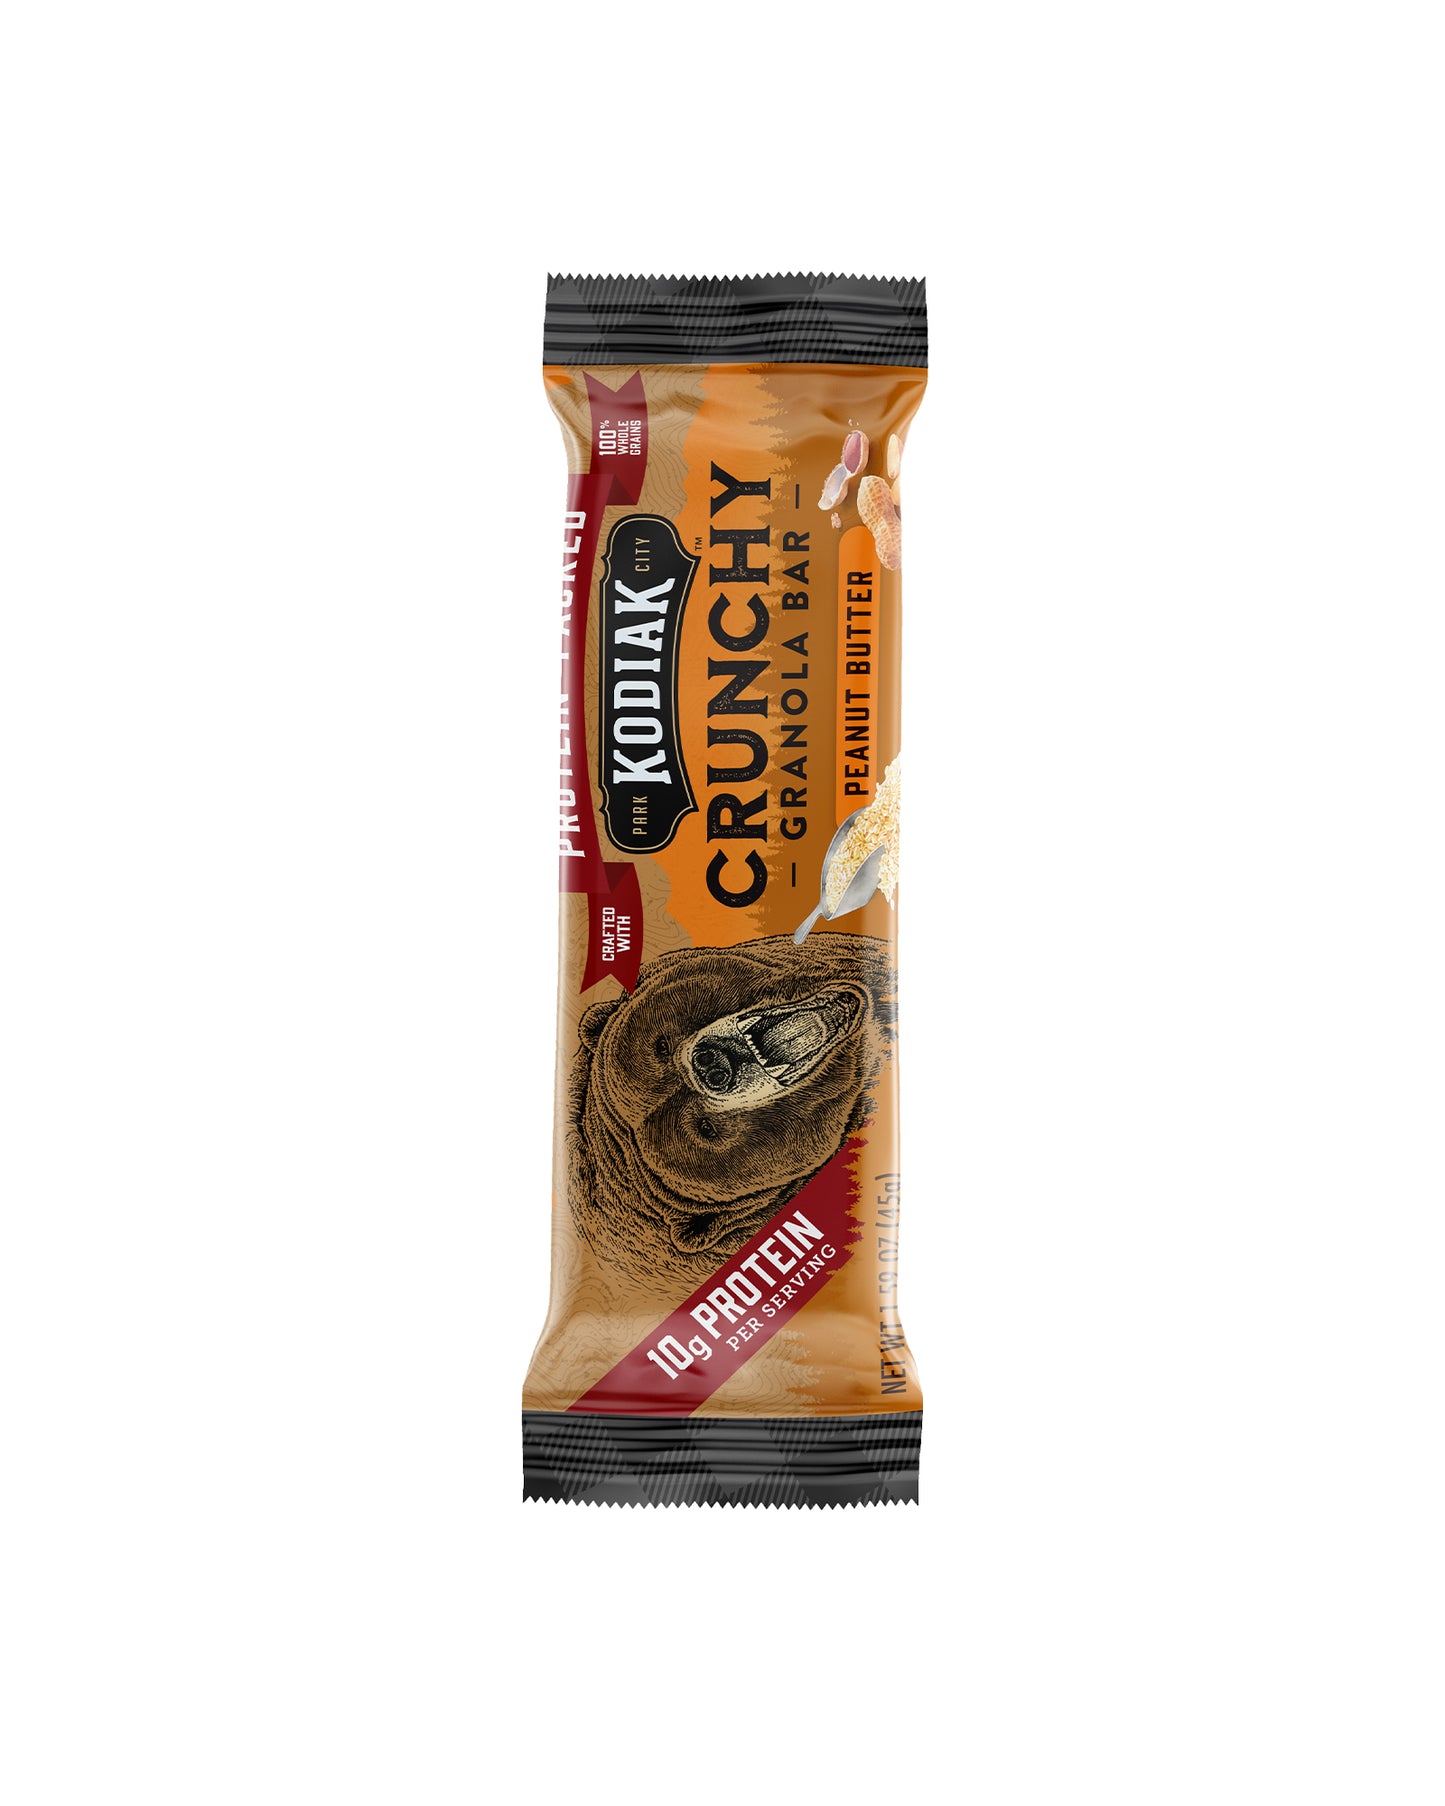 Peanut Butter Crunchy Granola Bars - Box of 6